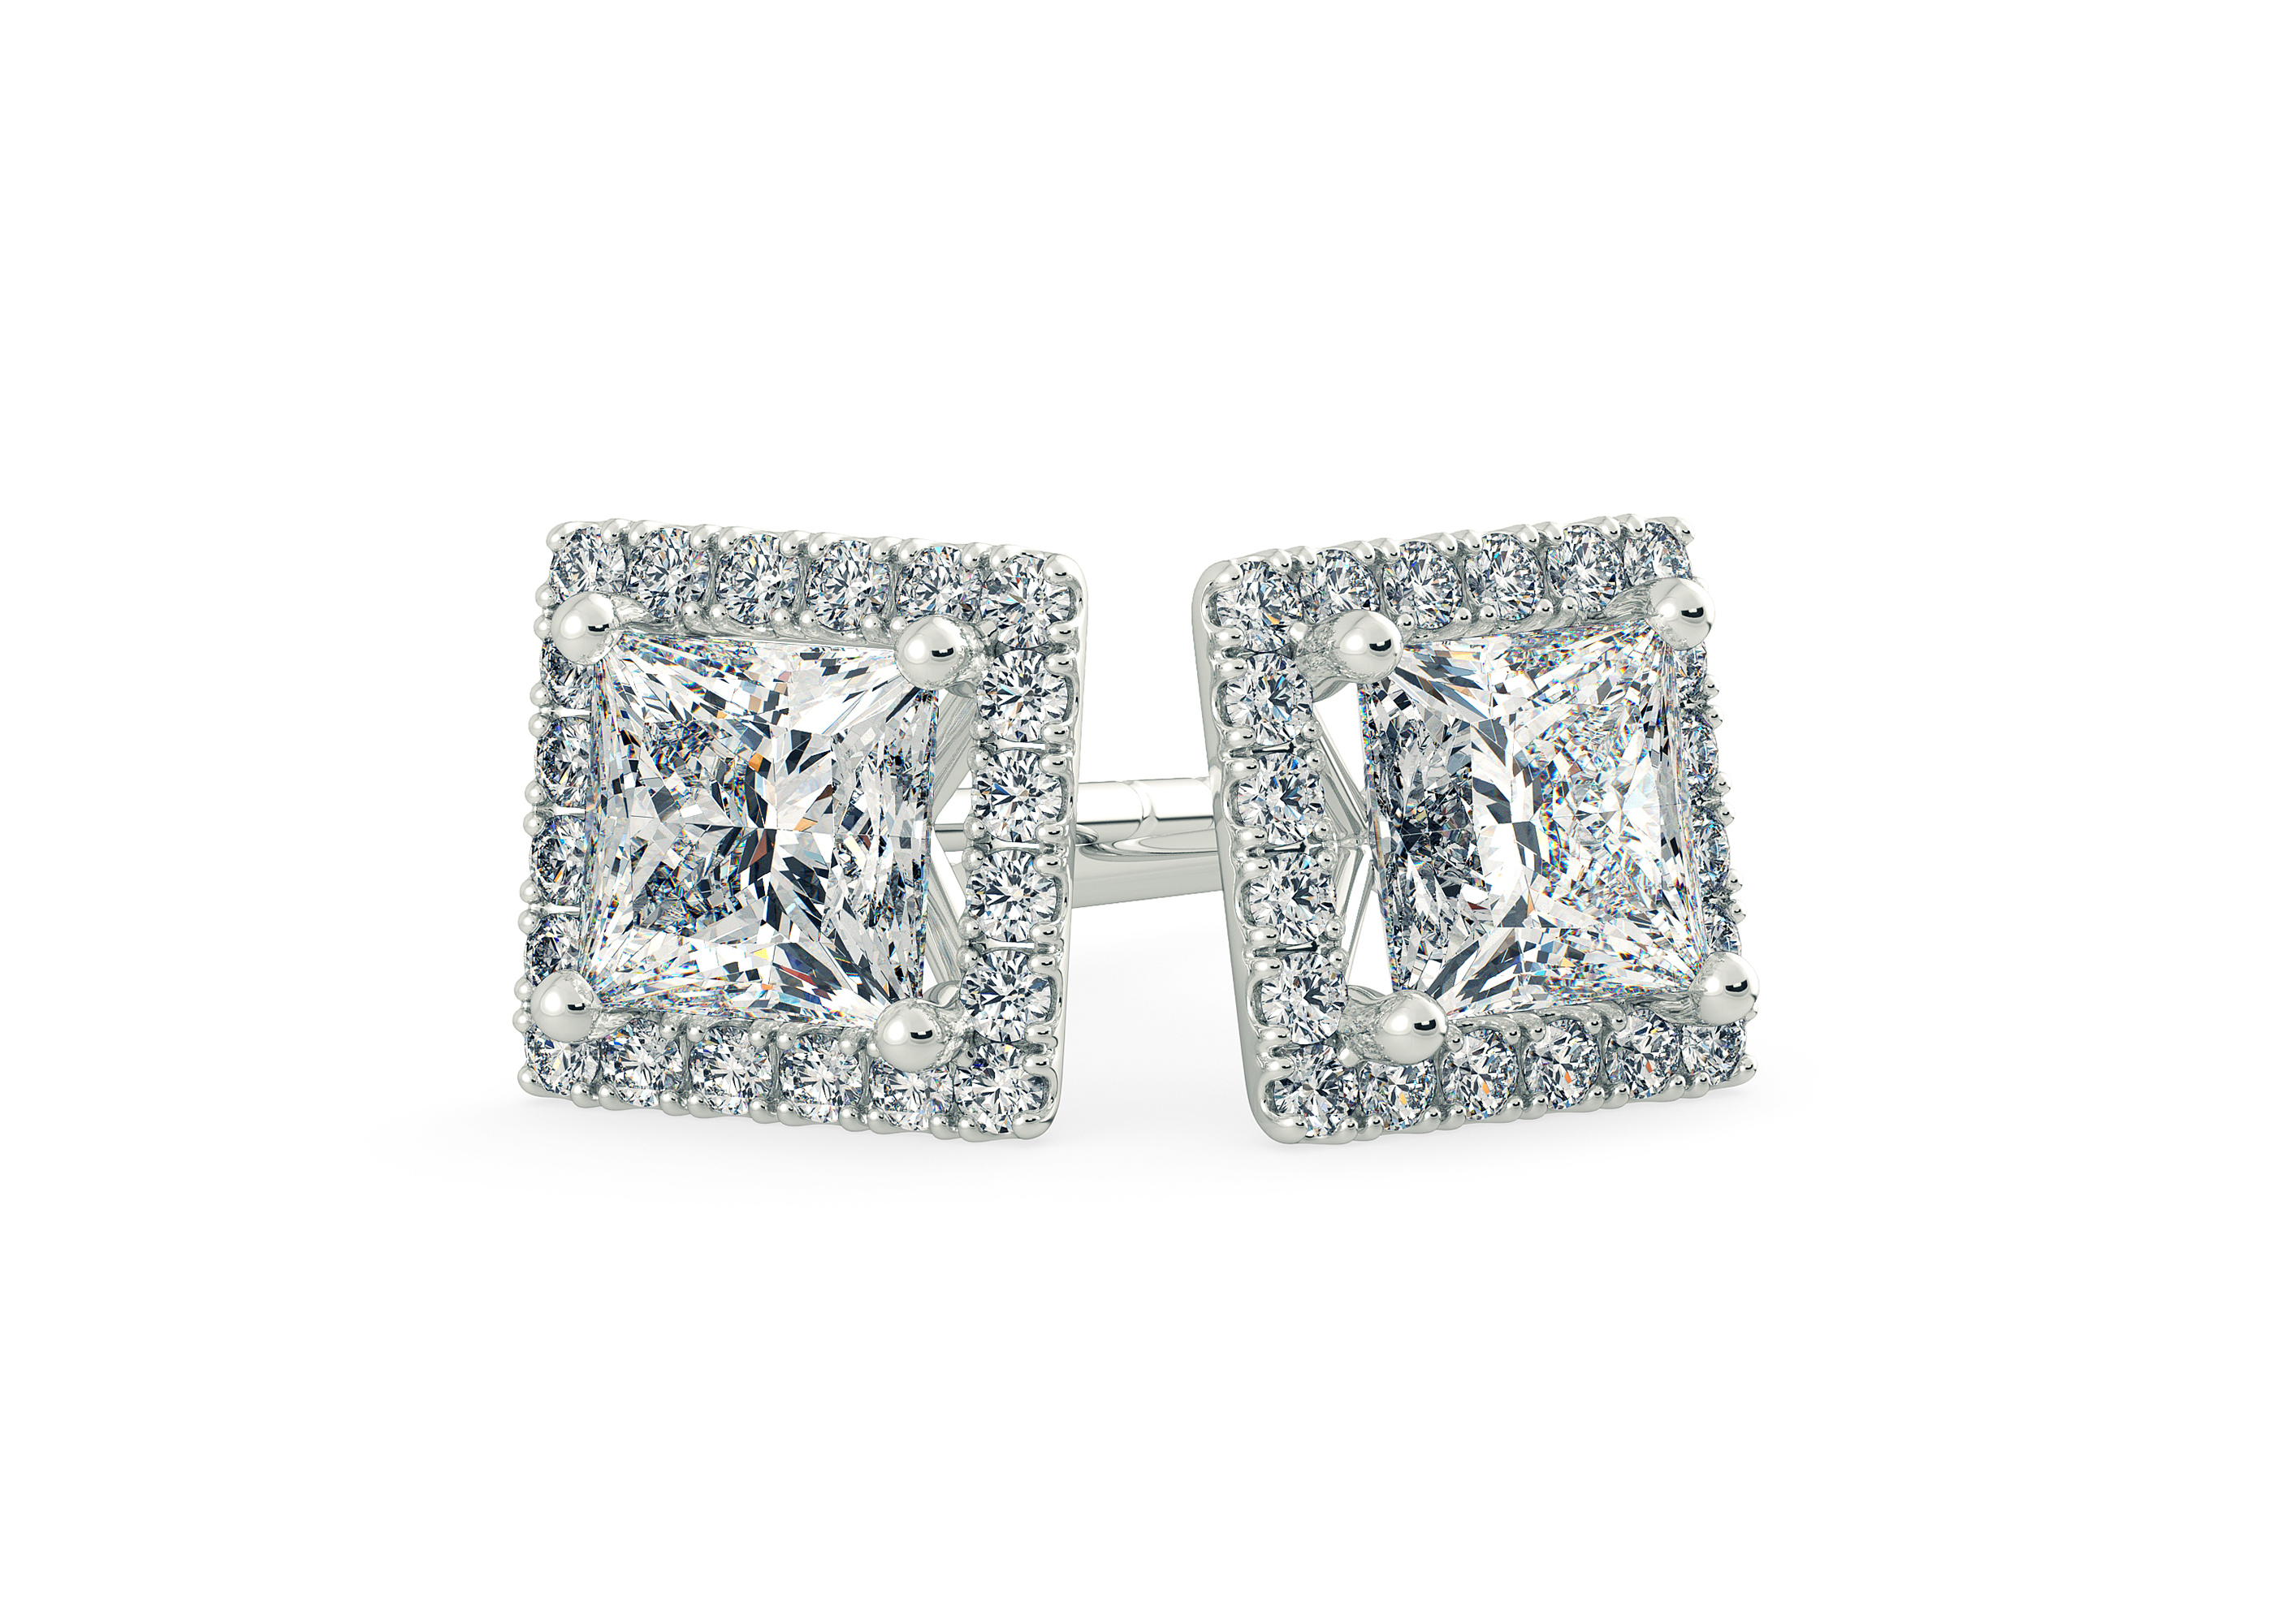 Bijou Princess Diamond Stud Earrings in 18K White Gold with Alpha Backs